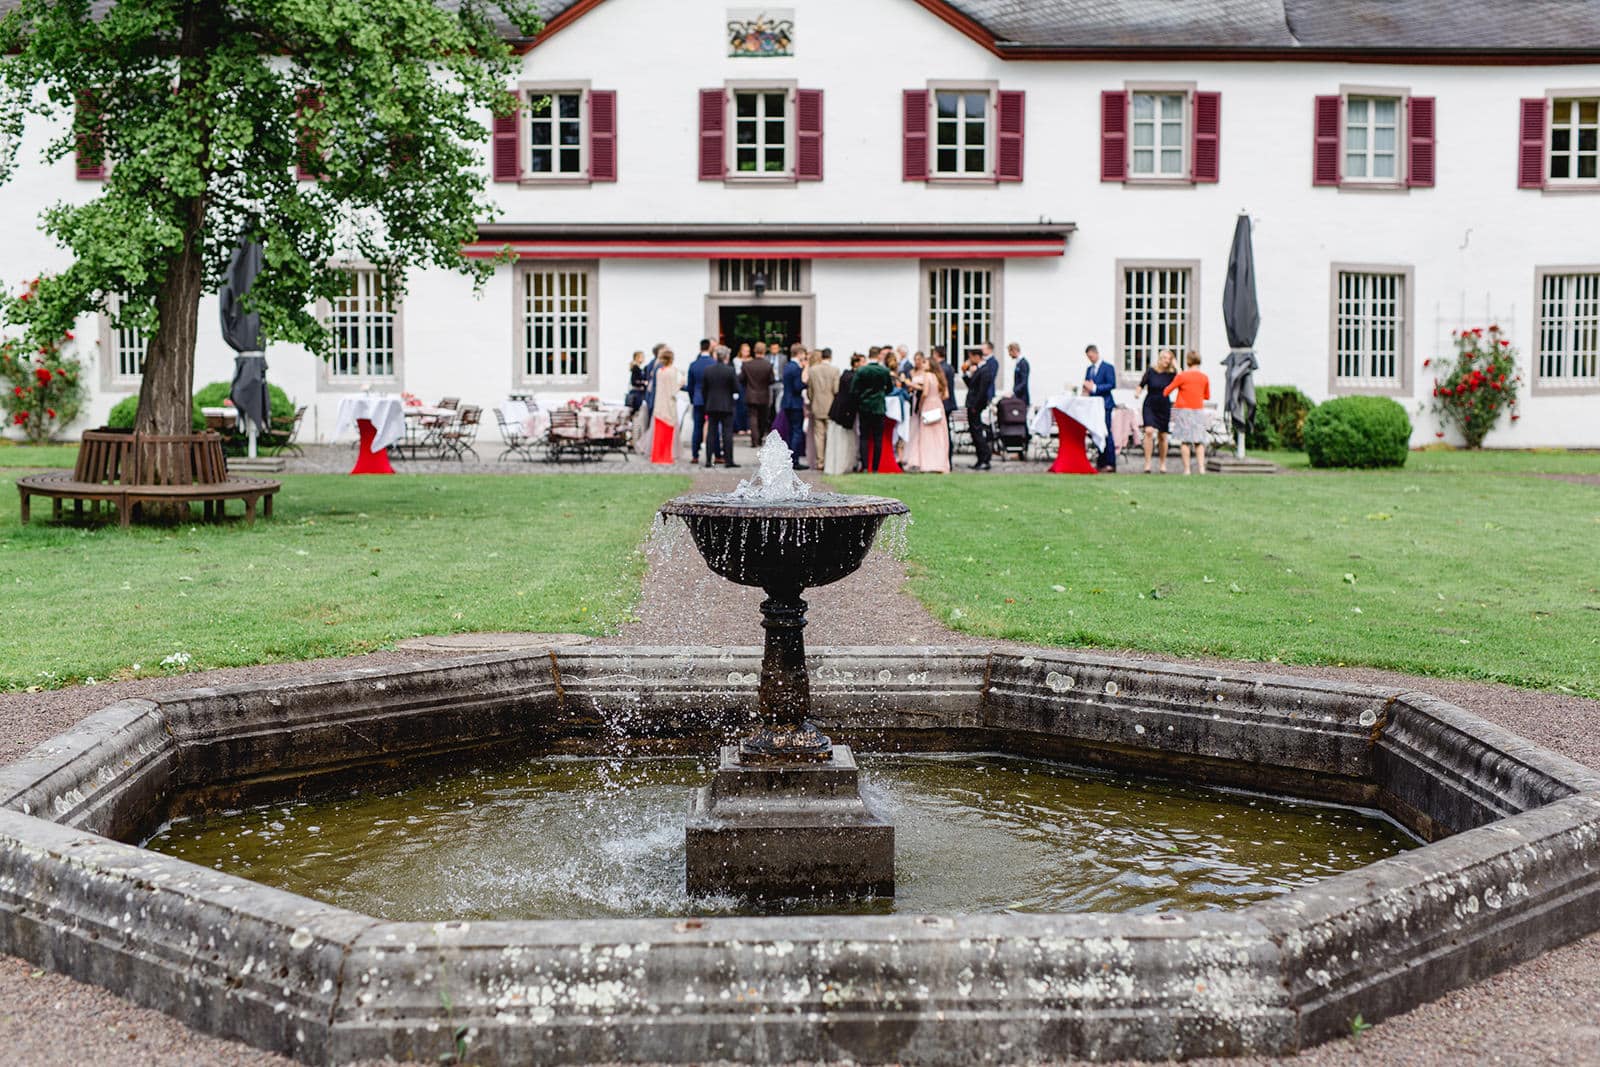 Tania-Flores-Photography-Hochzeitsfotograf-Koeln-Bonn-NRW-27